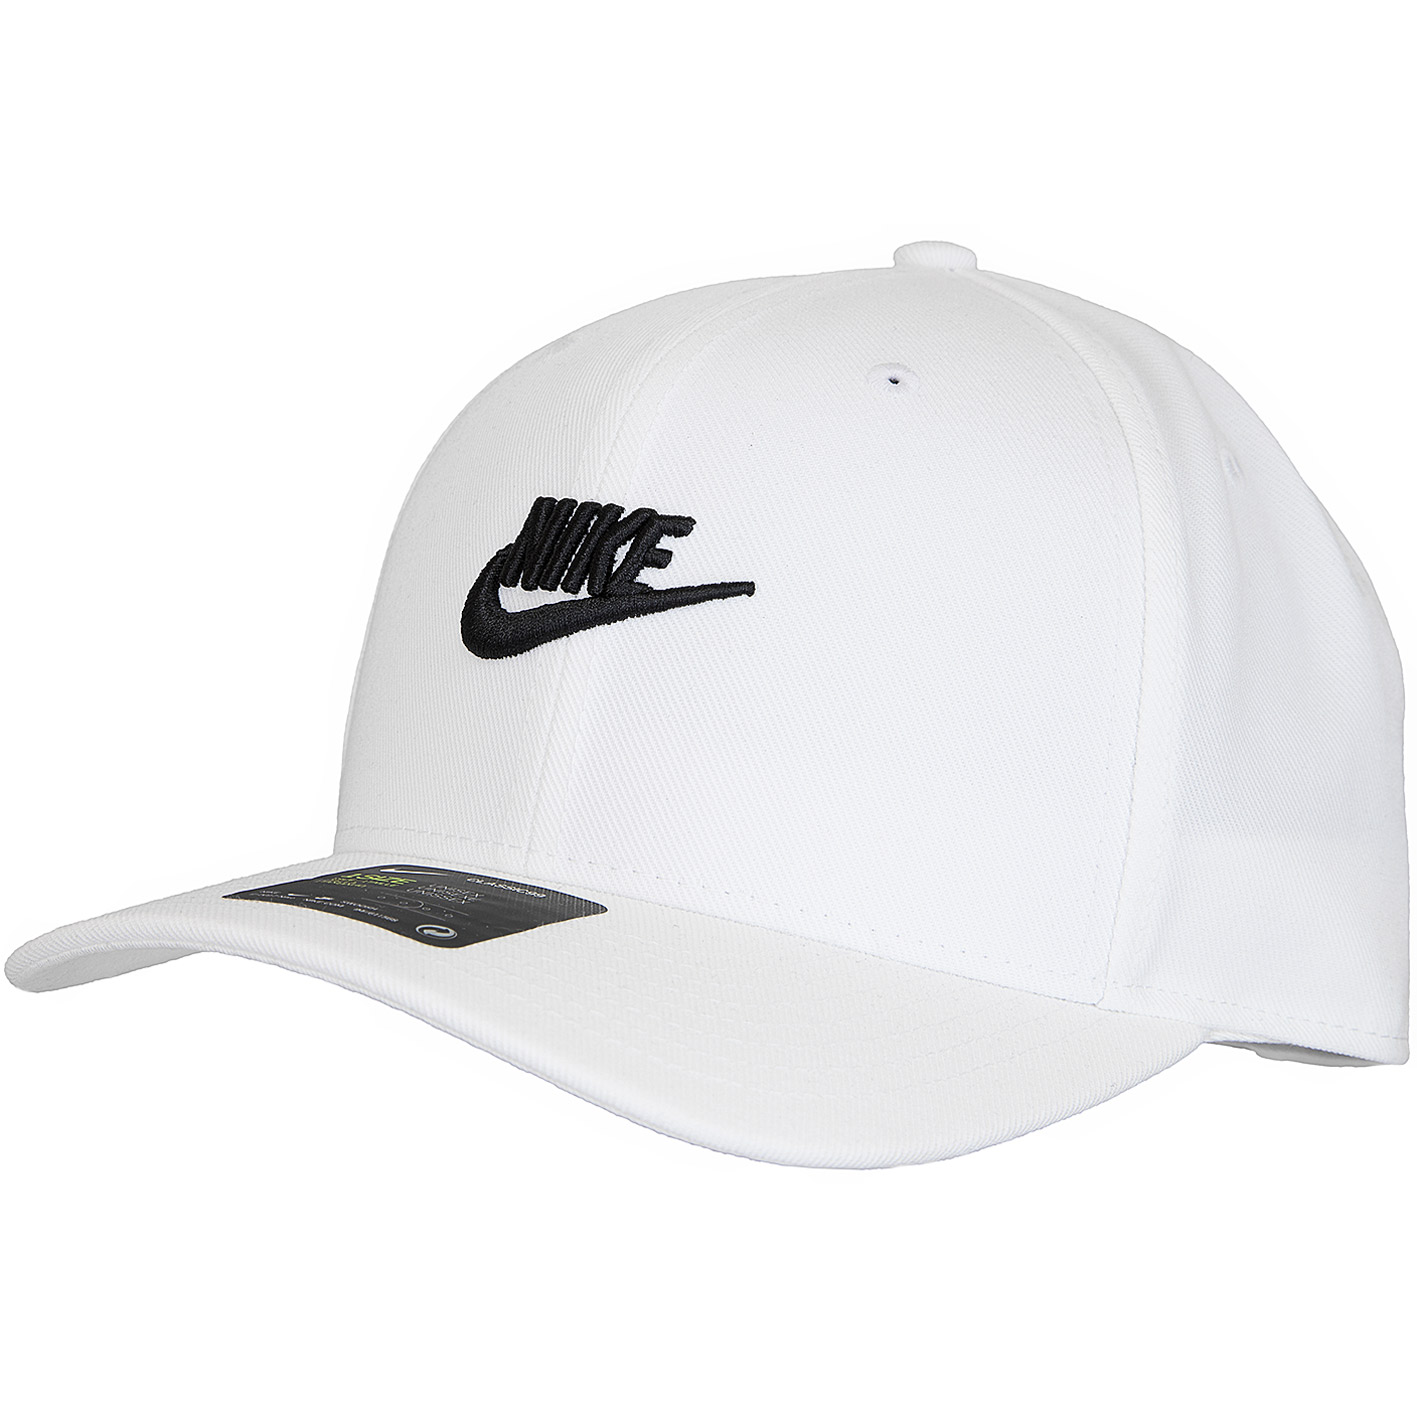 ☆ Nike Snapback Cap Futura Classic99 weiß/schwarz - hier bestellen!